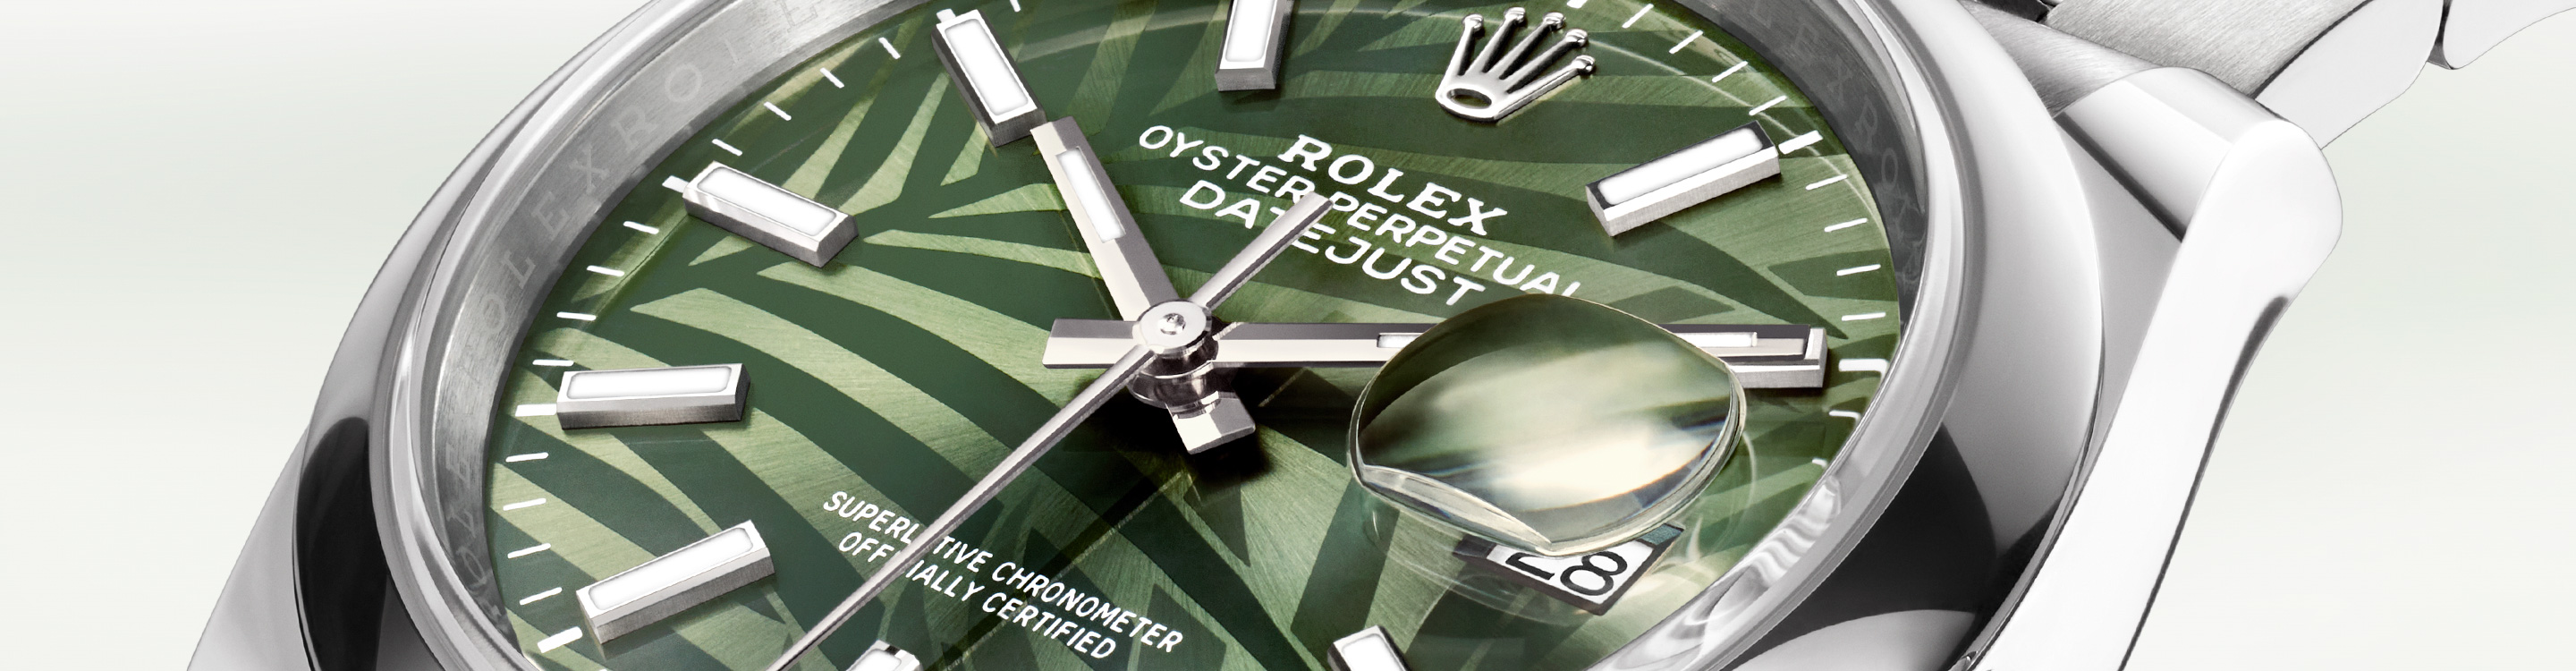 Reloj Rolex Datejust en Grassy